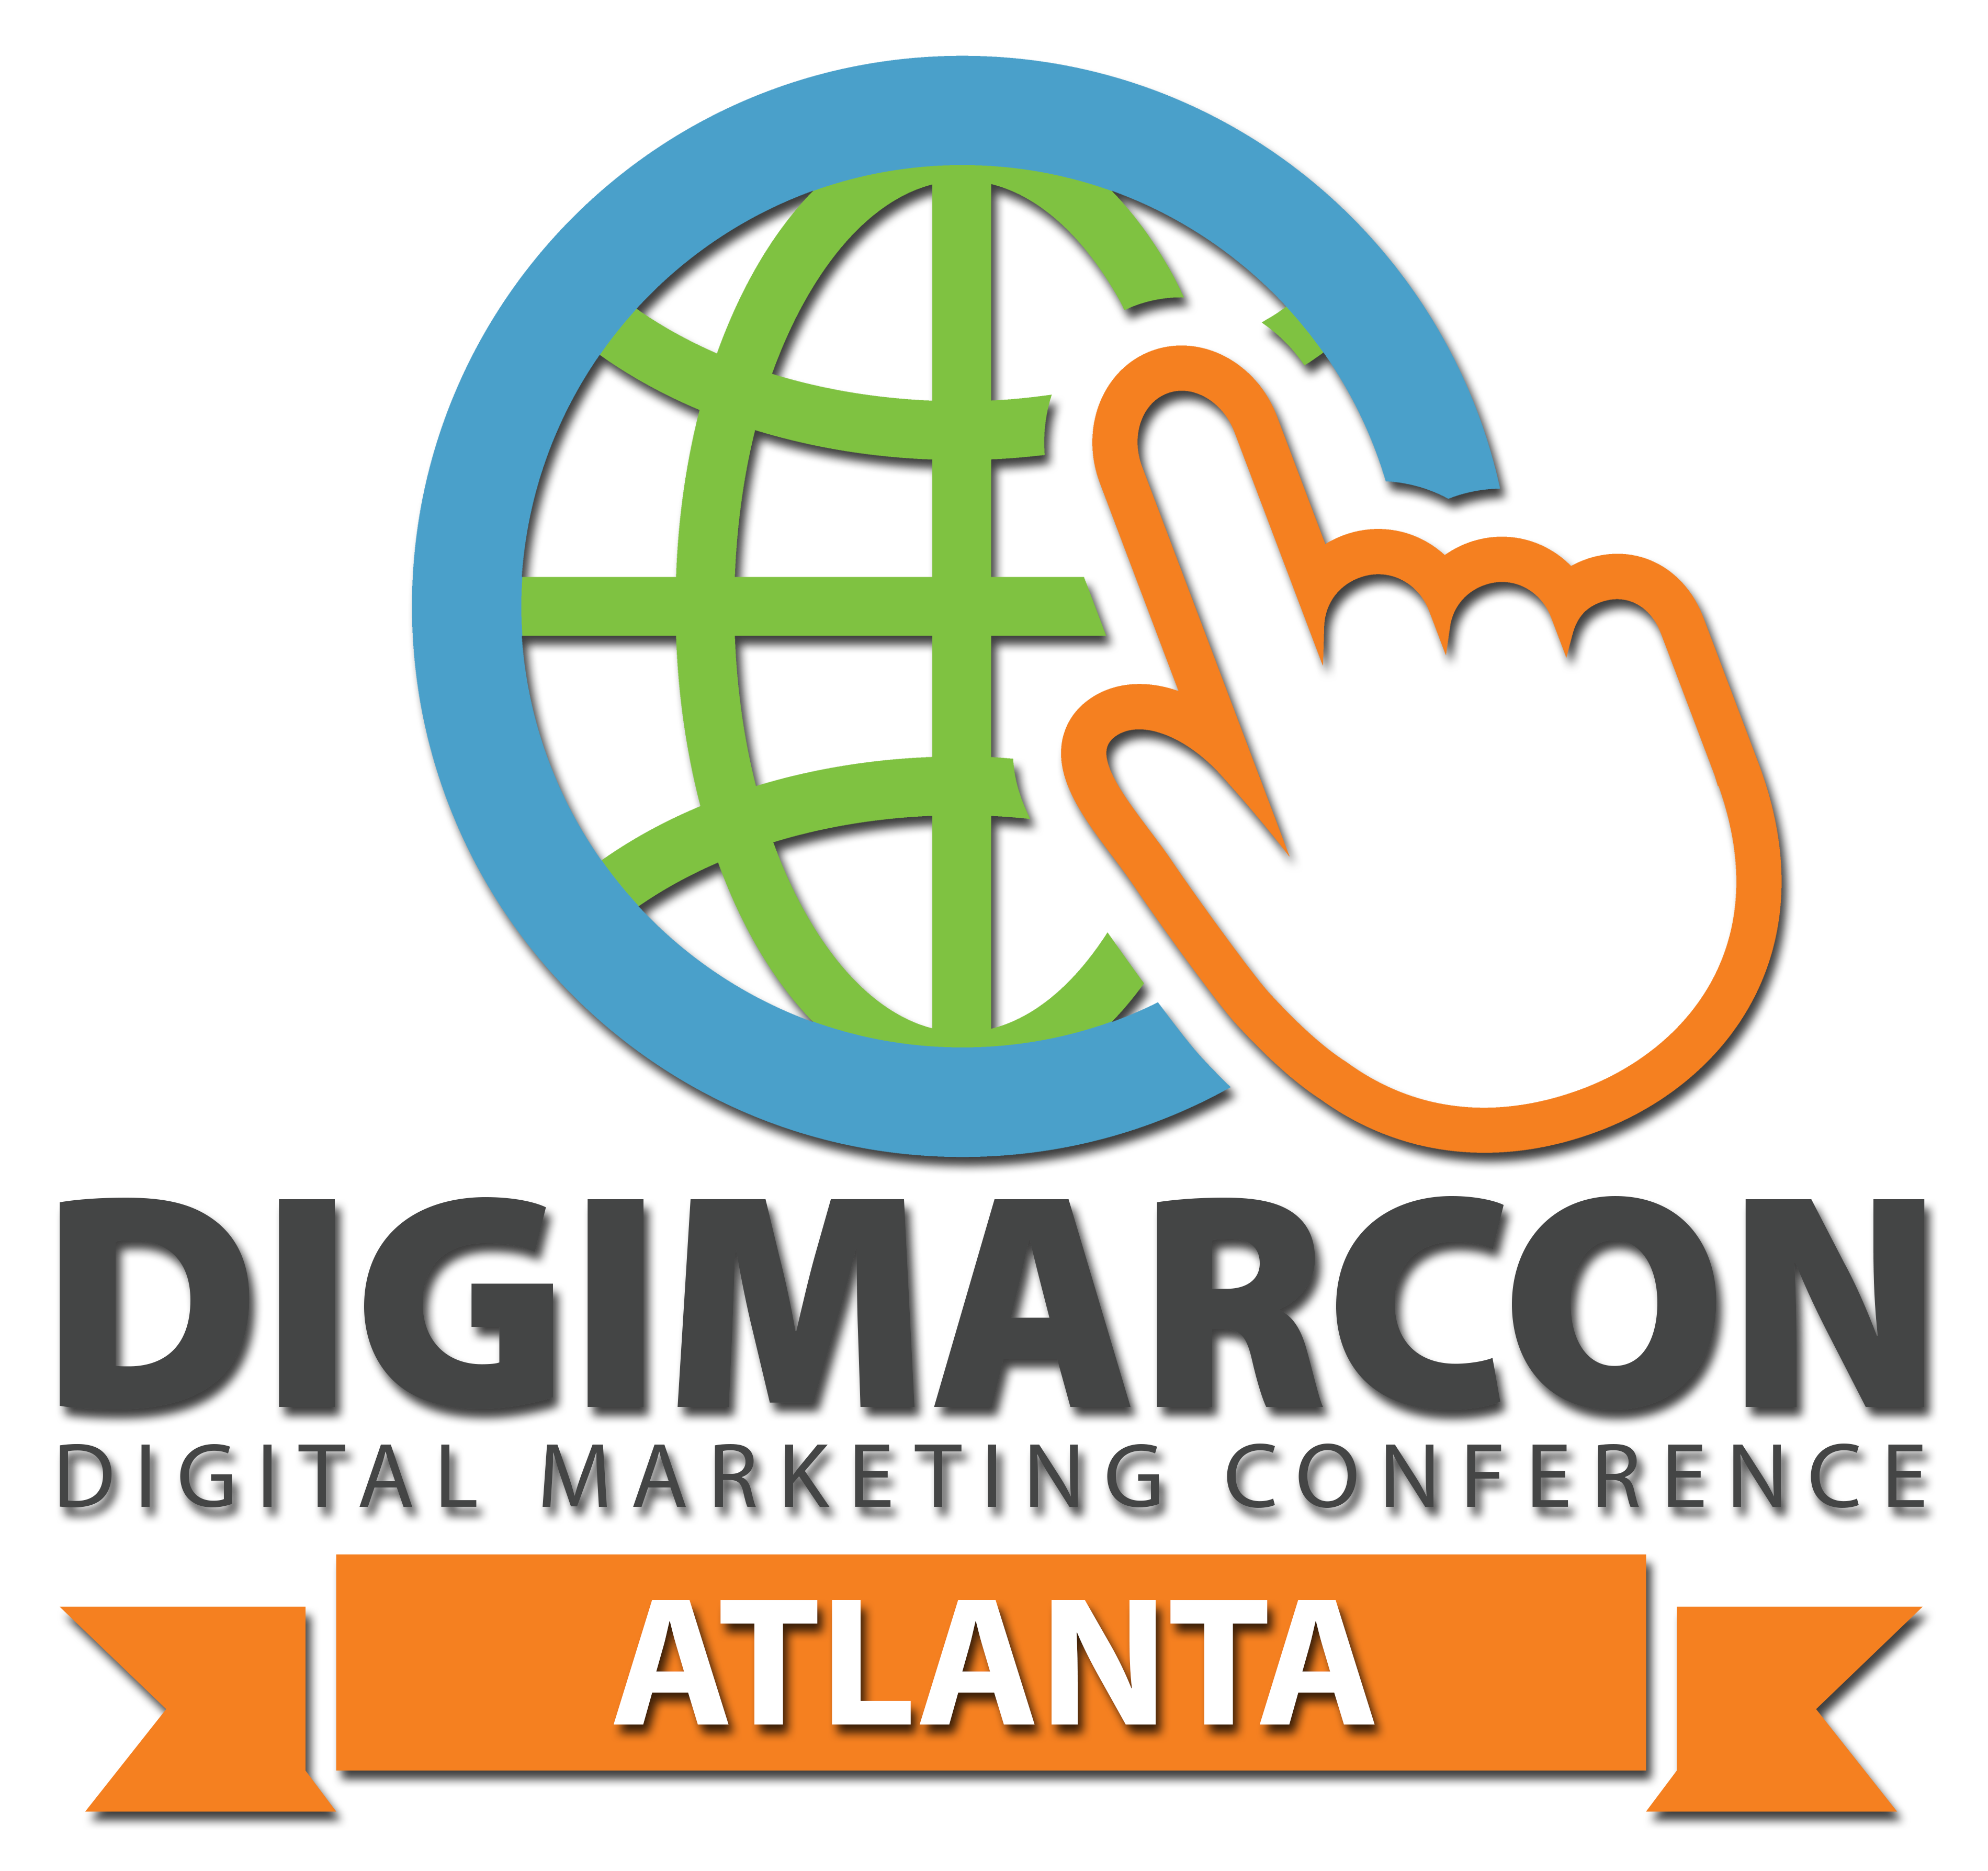 DigiMarCon Michigan – Digital Marketing, Media and Advertising Conference & Exhibition